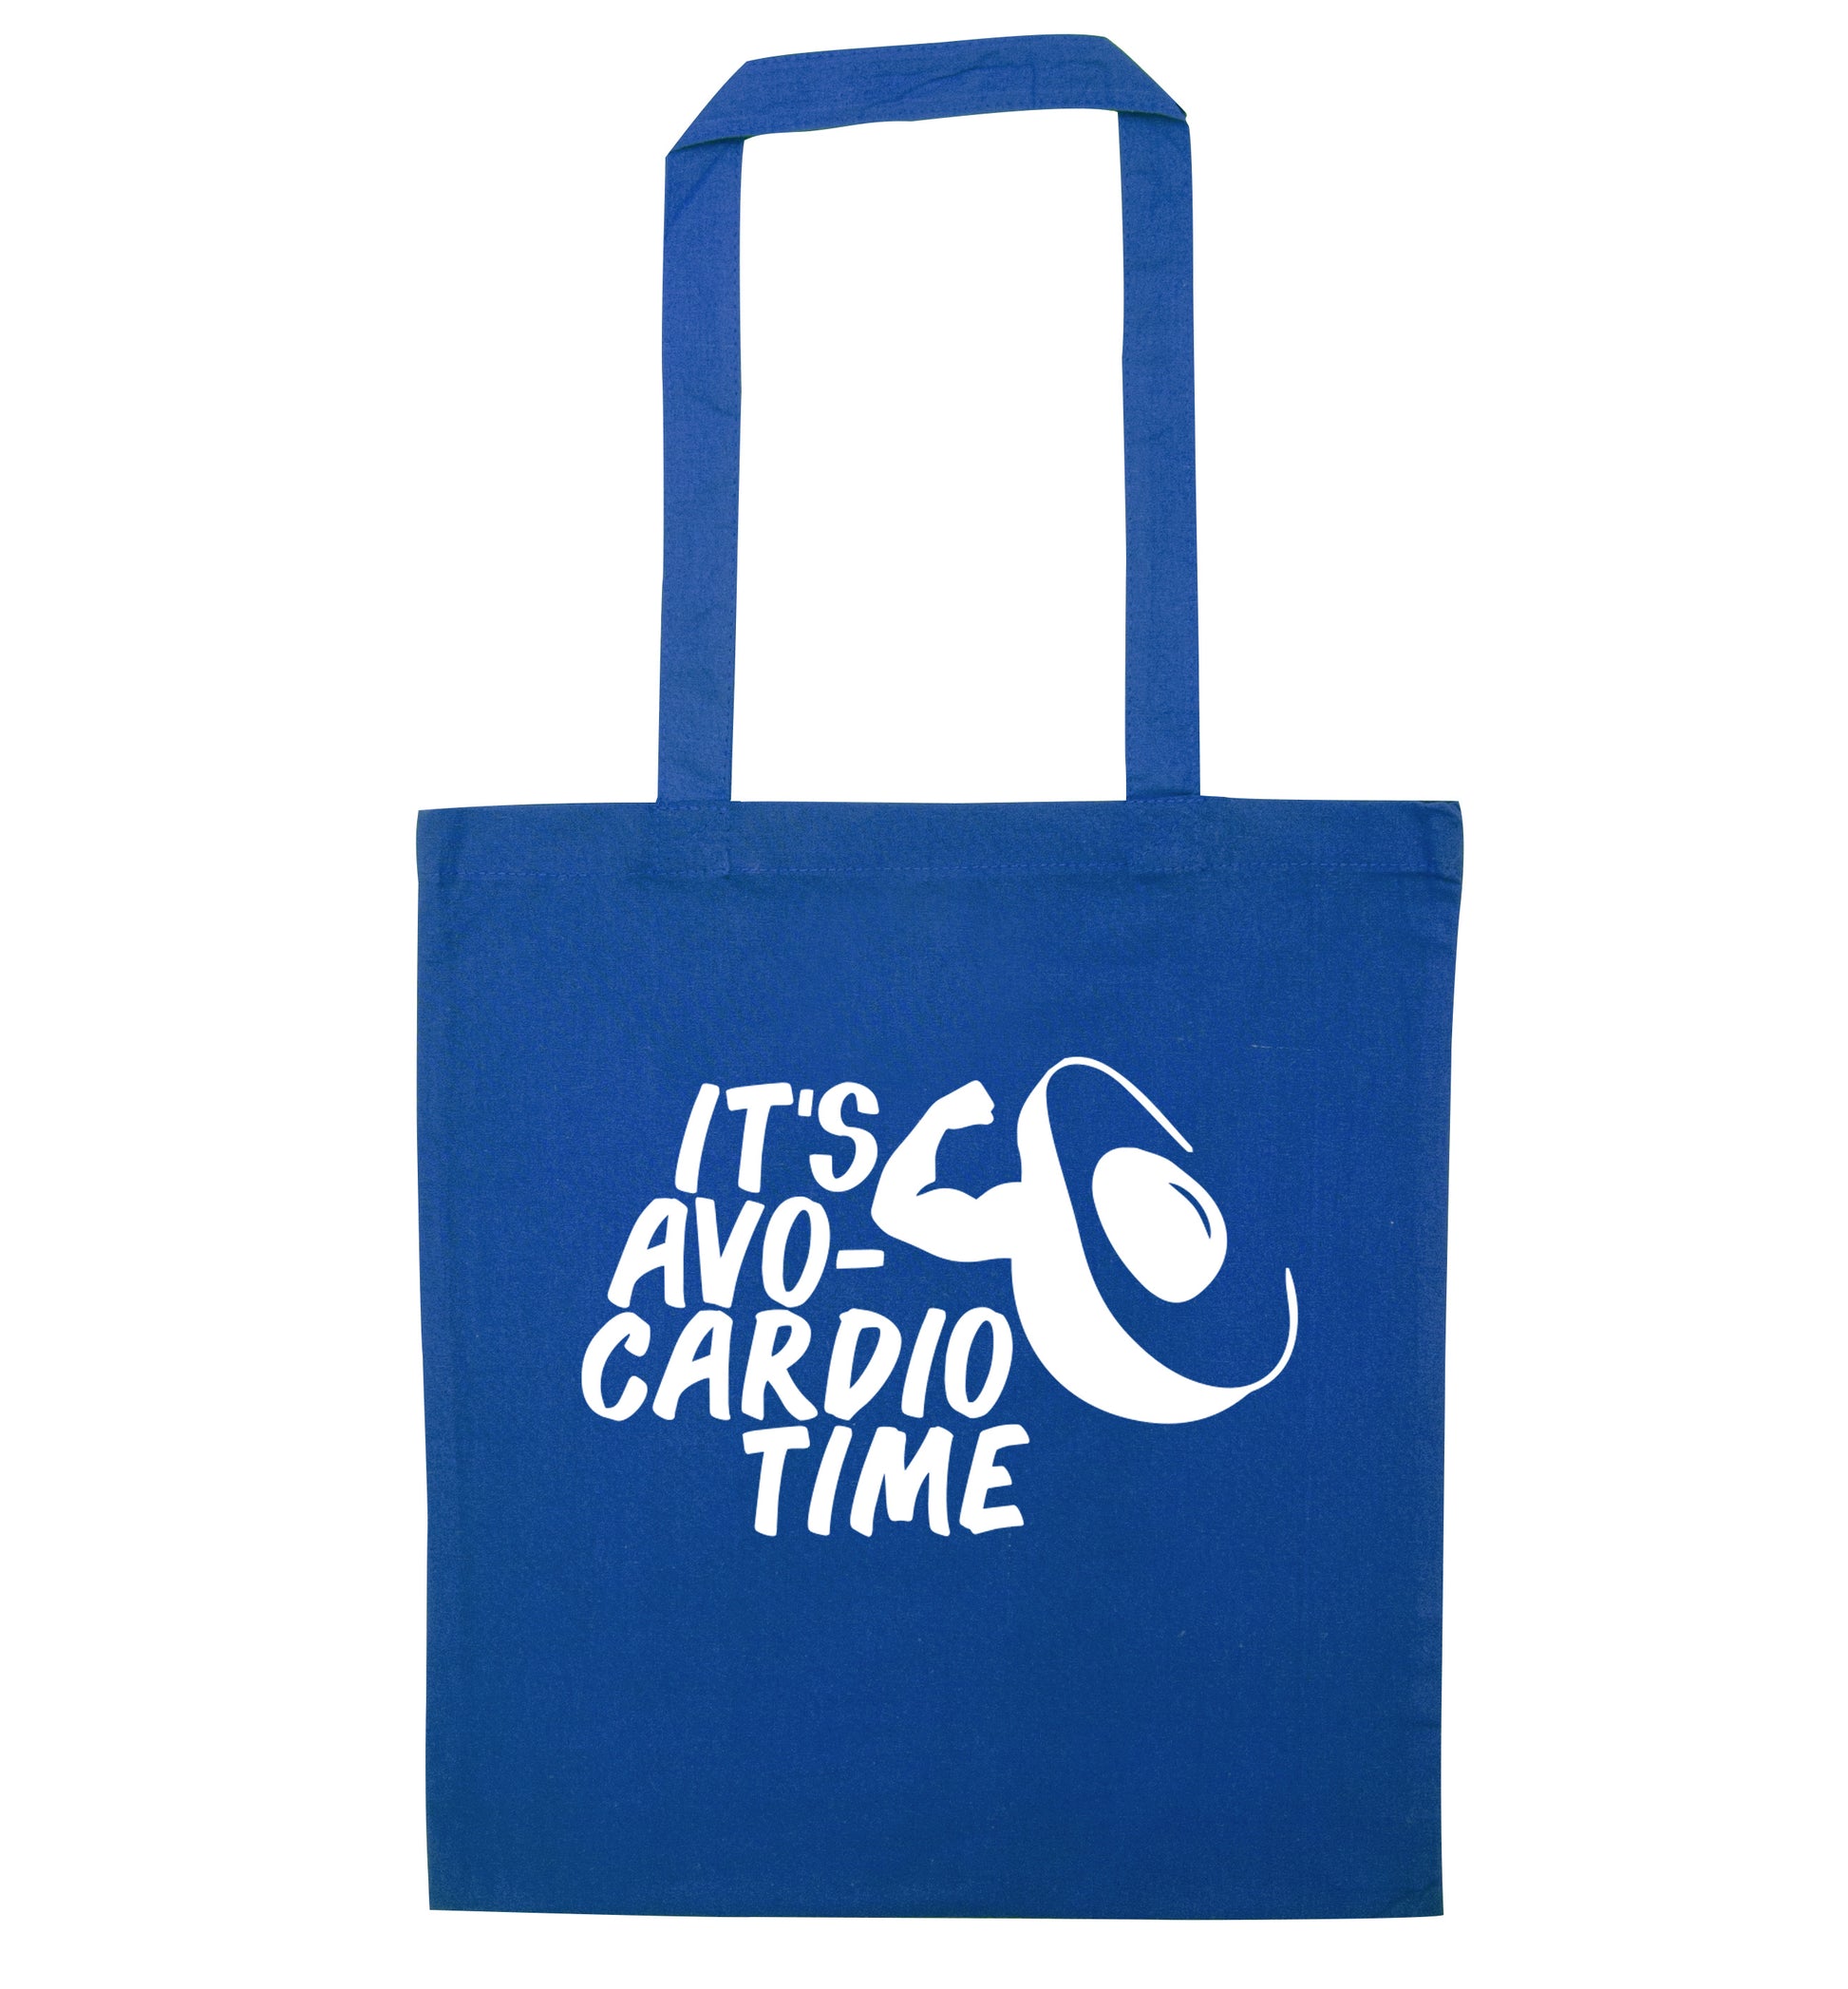 It's avo-cardio time blue tote bag